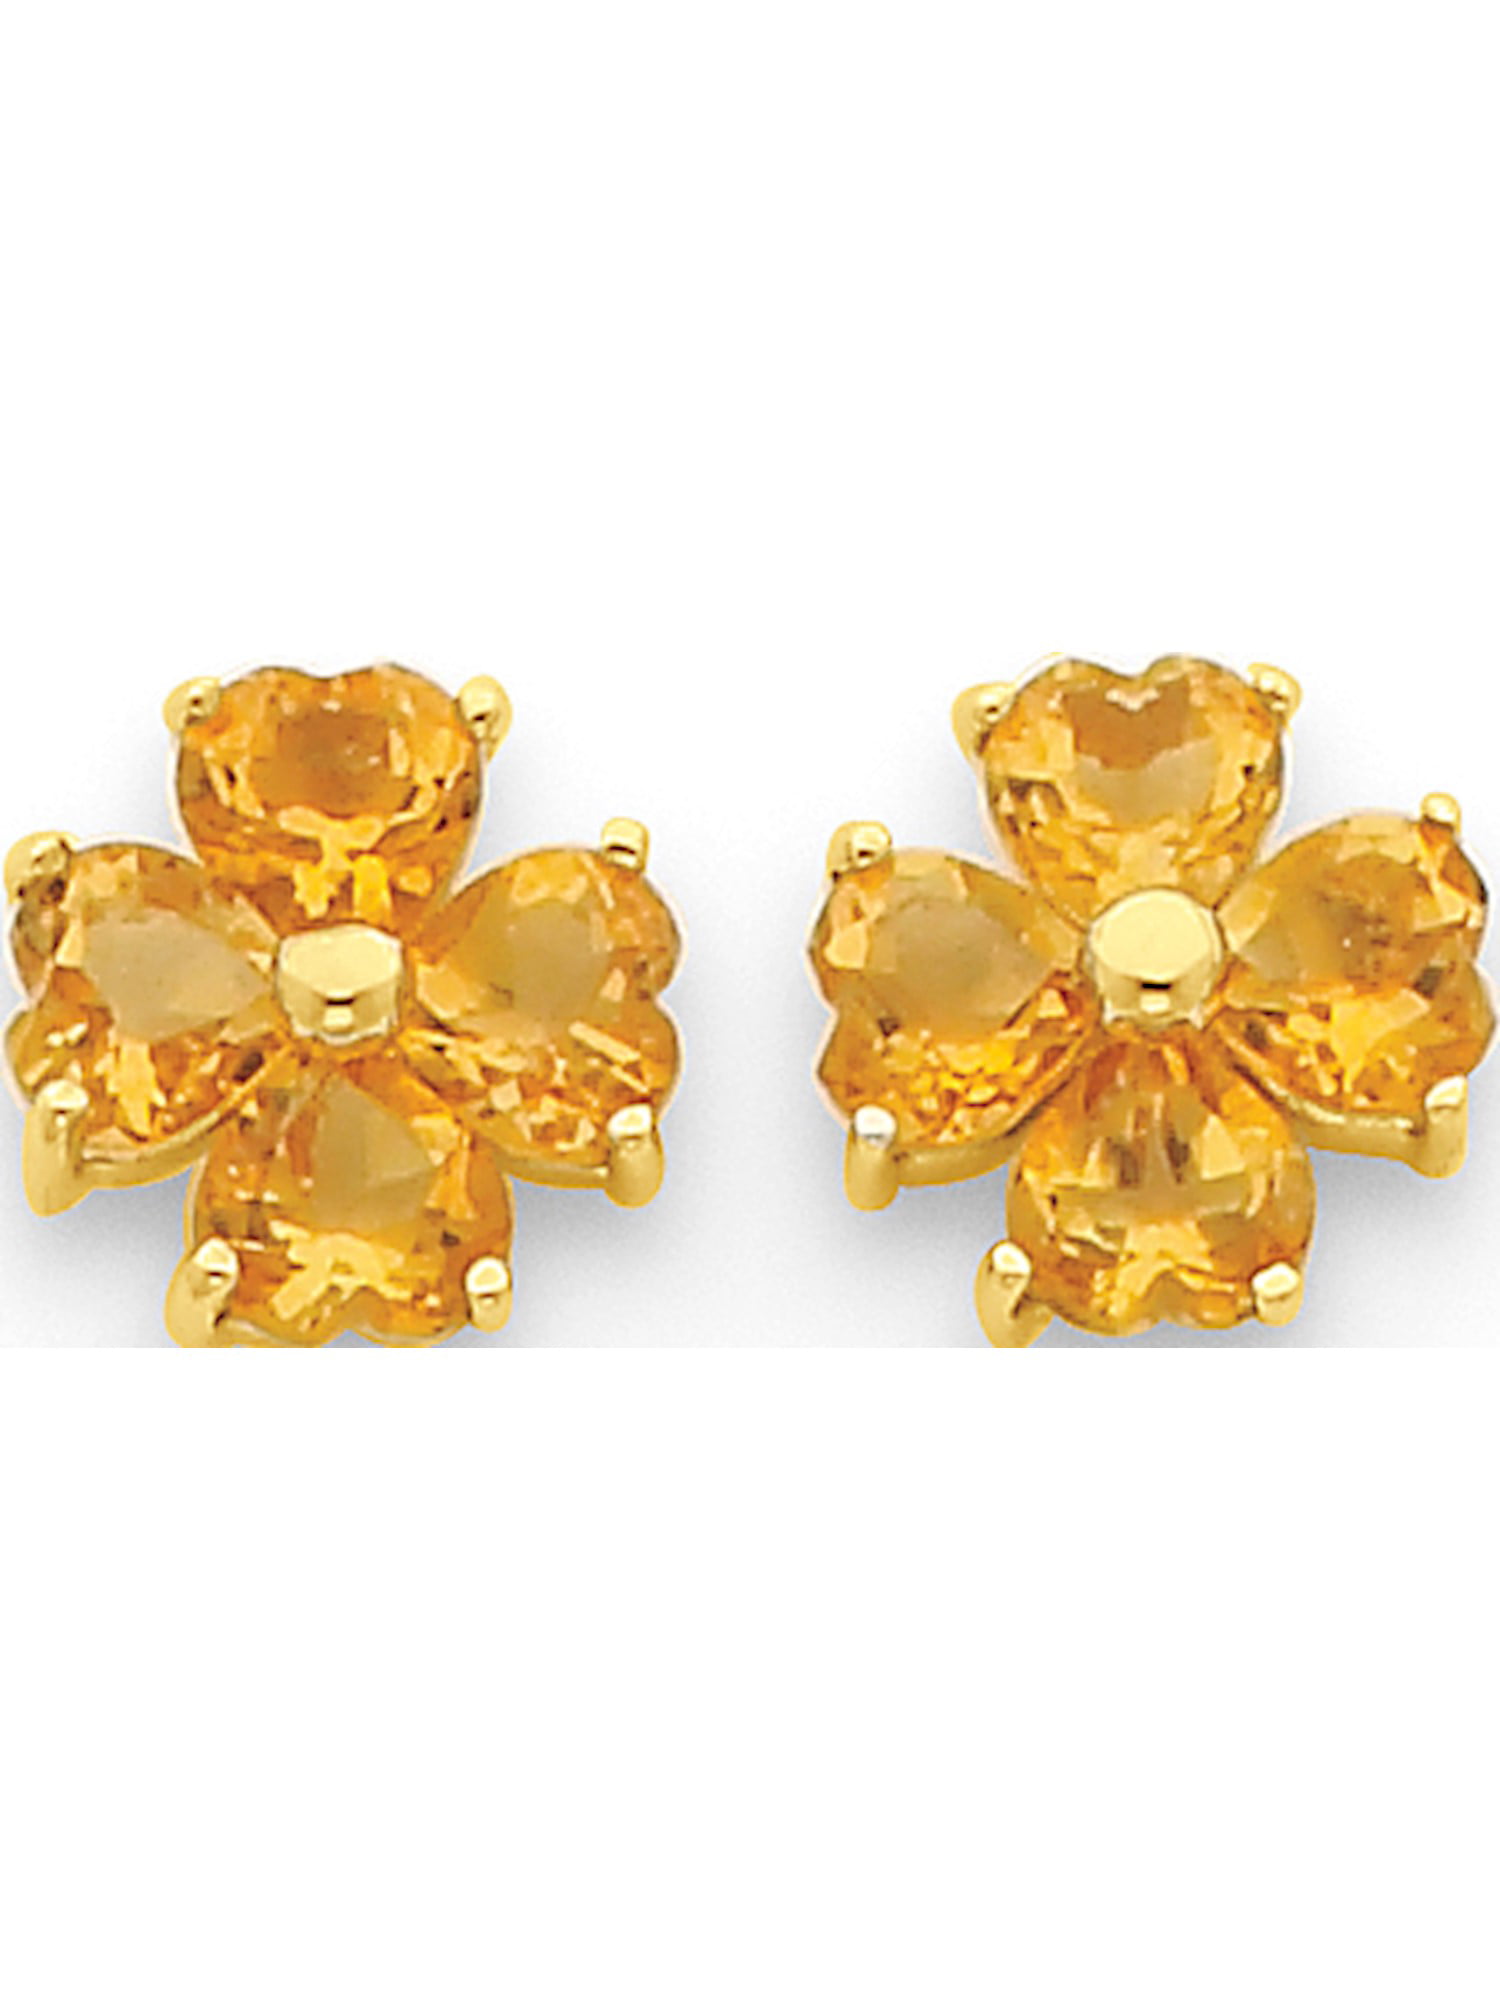 Flower in Heart Stud Earrings Solid 14k Yellow Gold Diamond Cut Style Polished Genuine 9 x 9 mm 